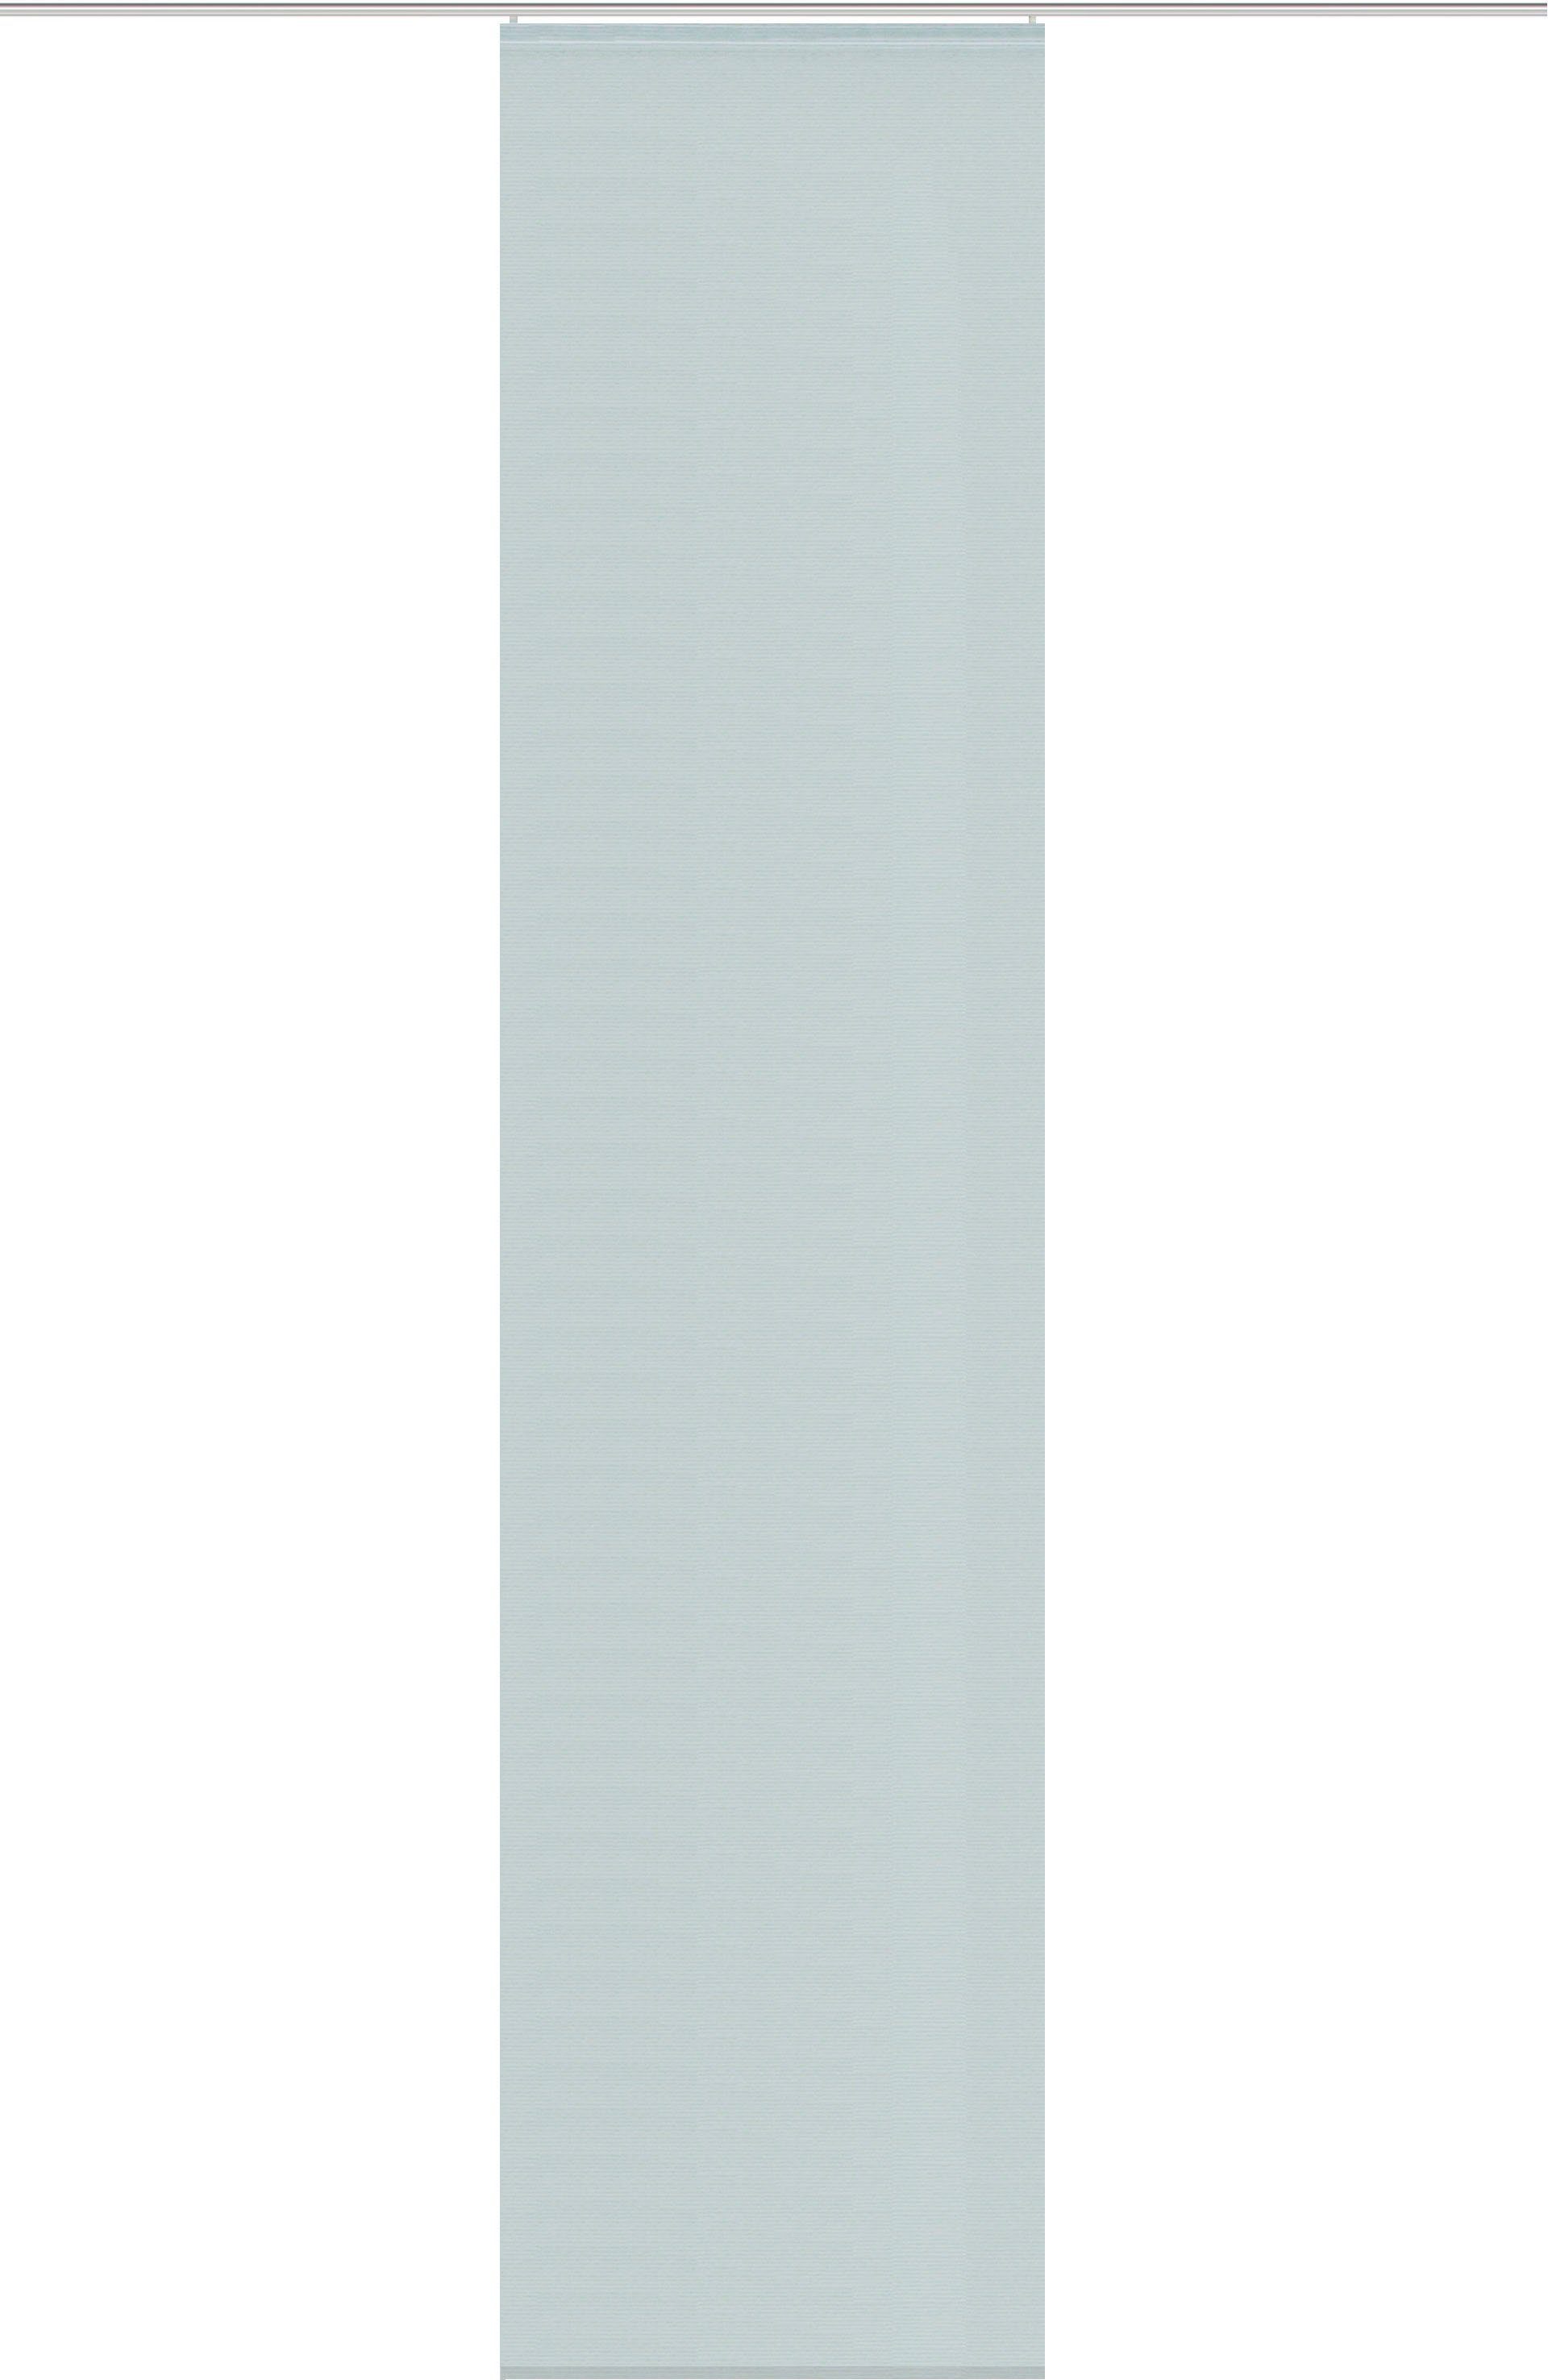 Schiebegardine SIEGLINDE, HOME WOHNIDEEN, Bambusoptik halbtransparent, (1 245x60, St), mint Paneelwagen HxB